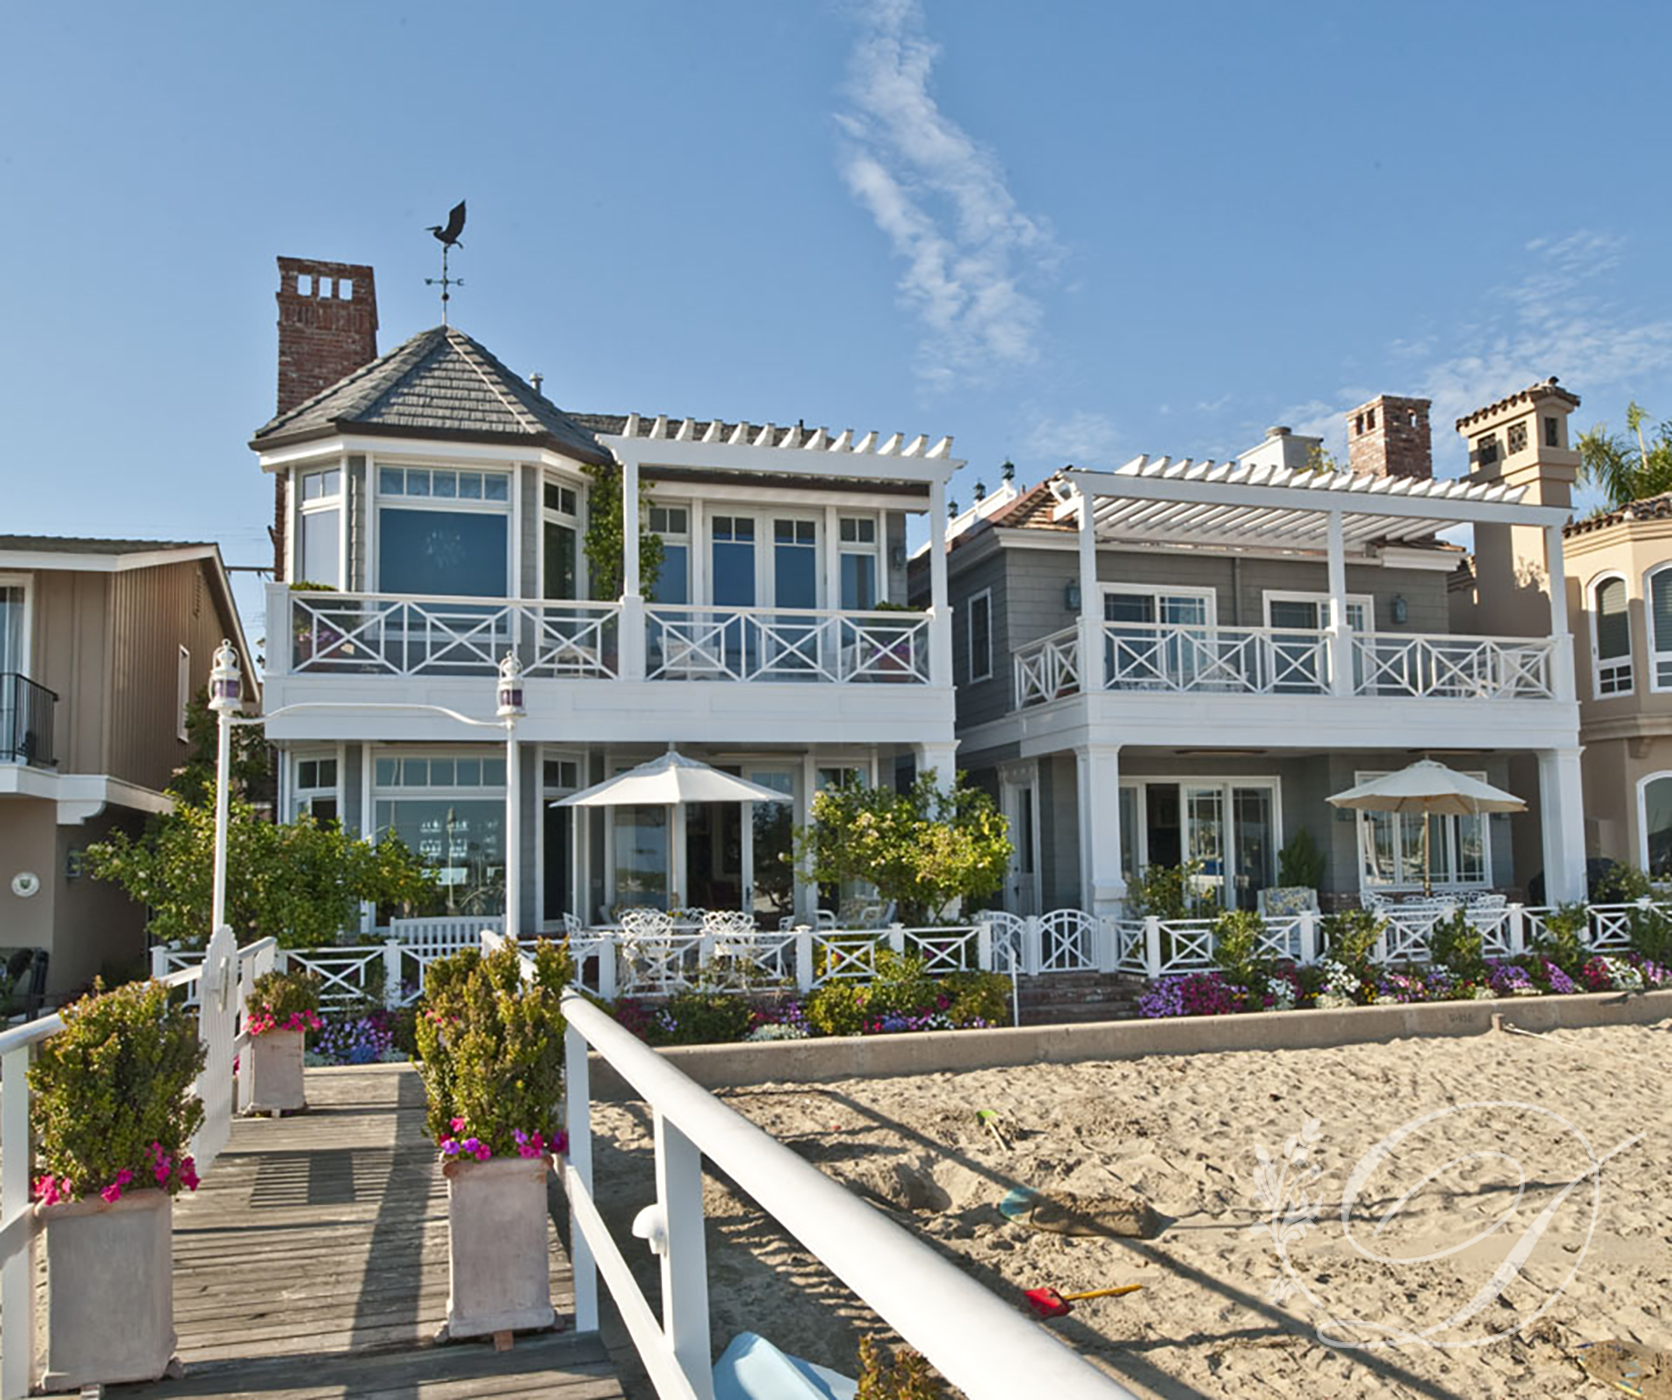 012_Exterior-Newport-Beach-Houses